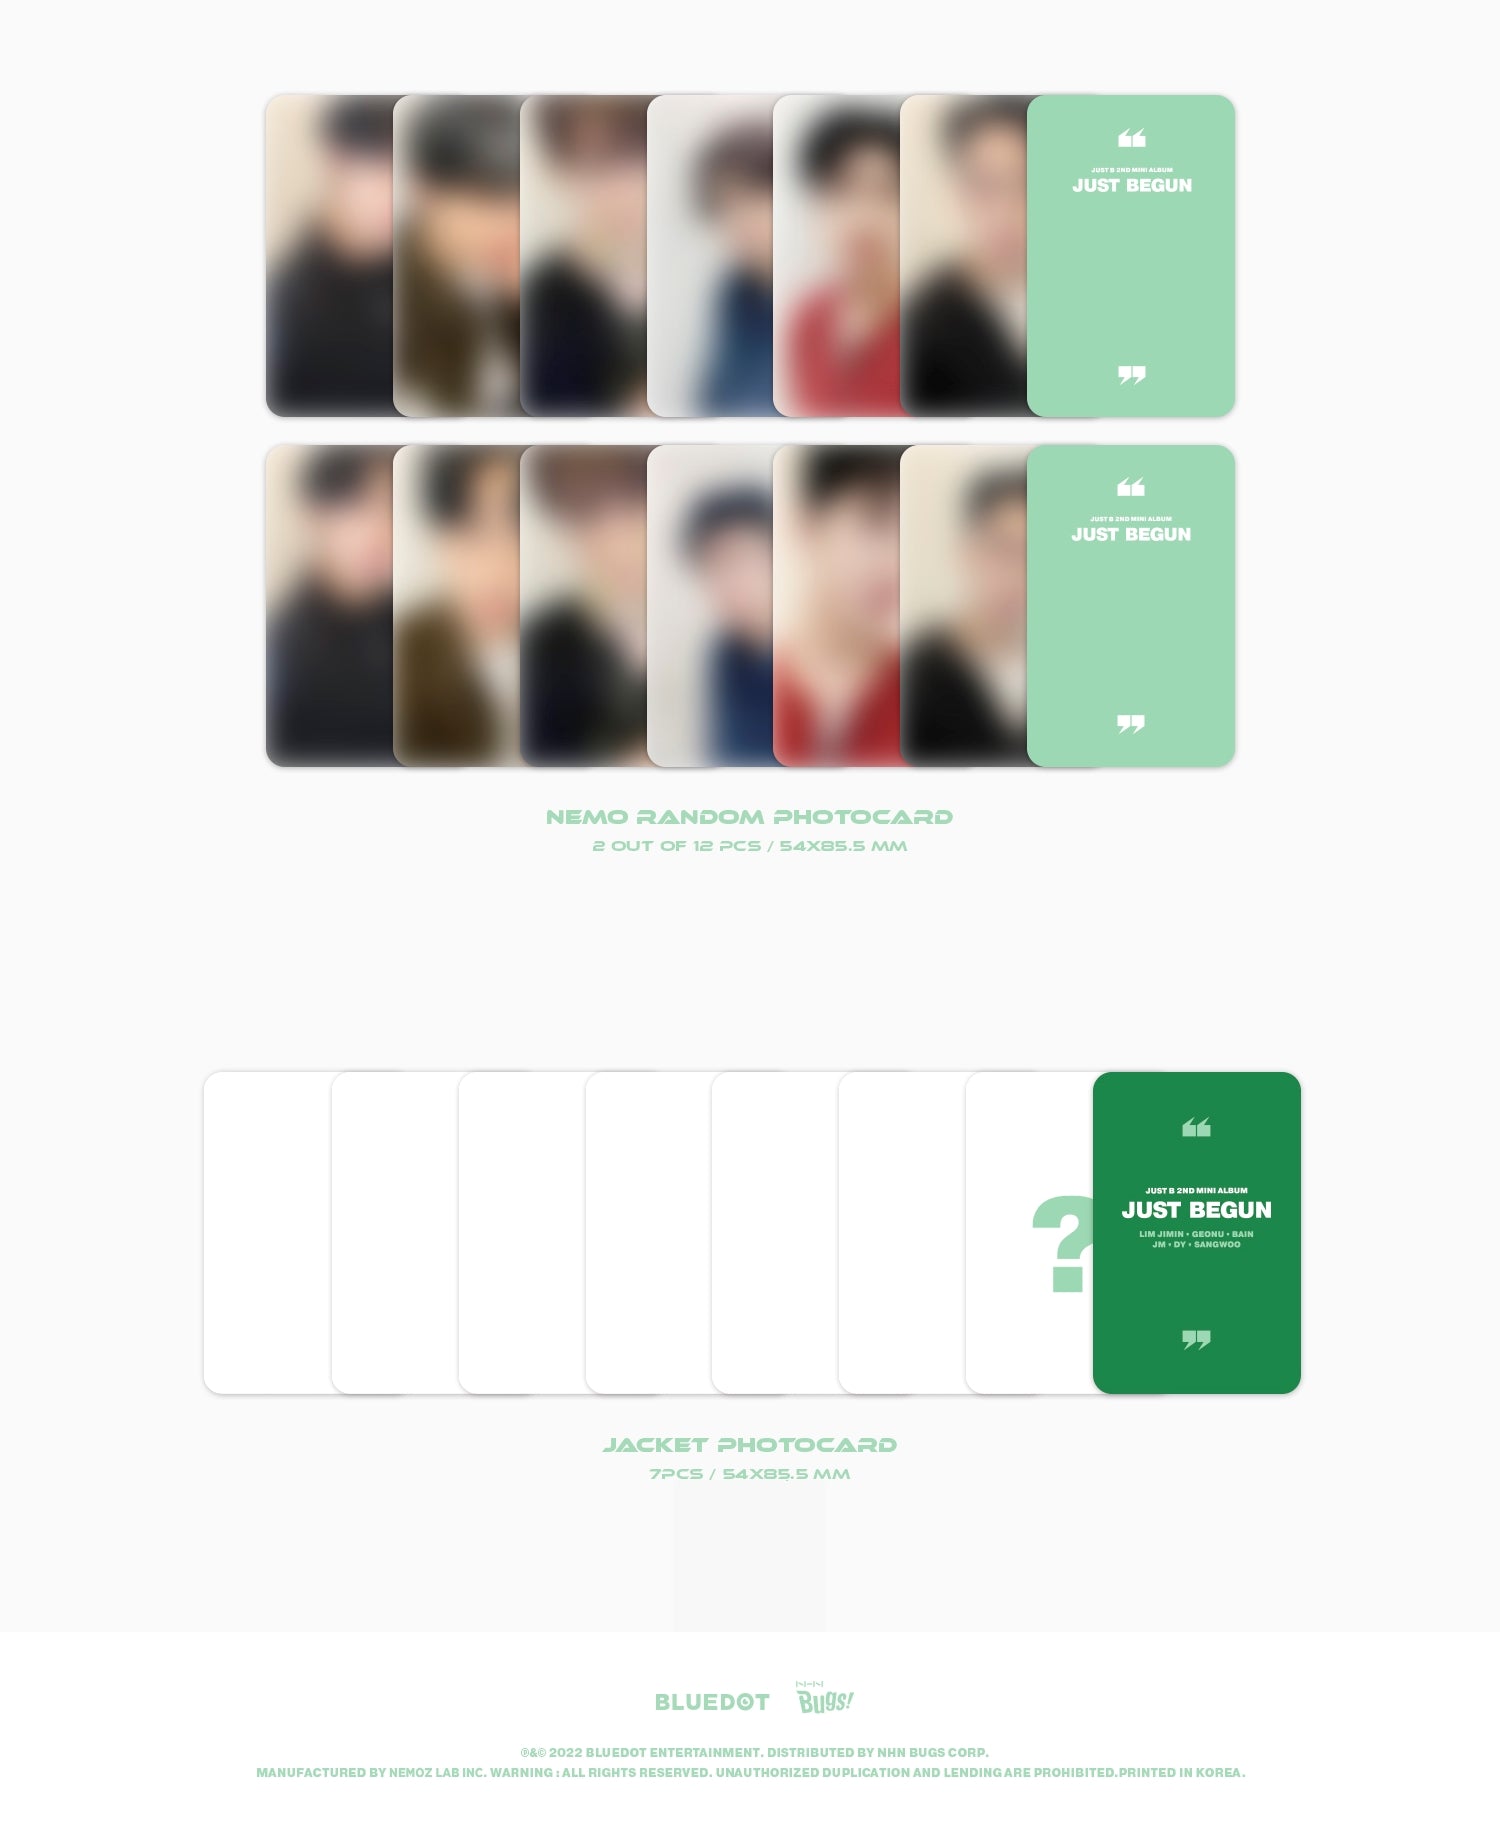 JUST B 2nd Mini Album JUST BEGUN Inclusions Nemo Random Photocard Jacket Photocard